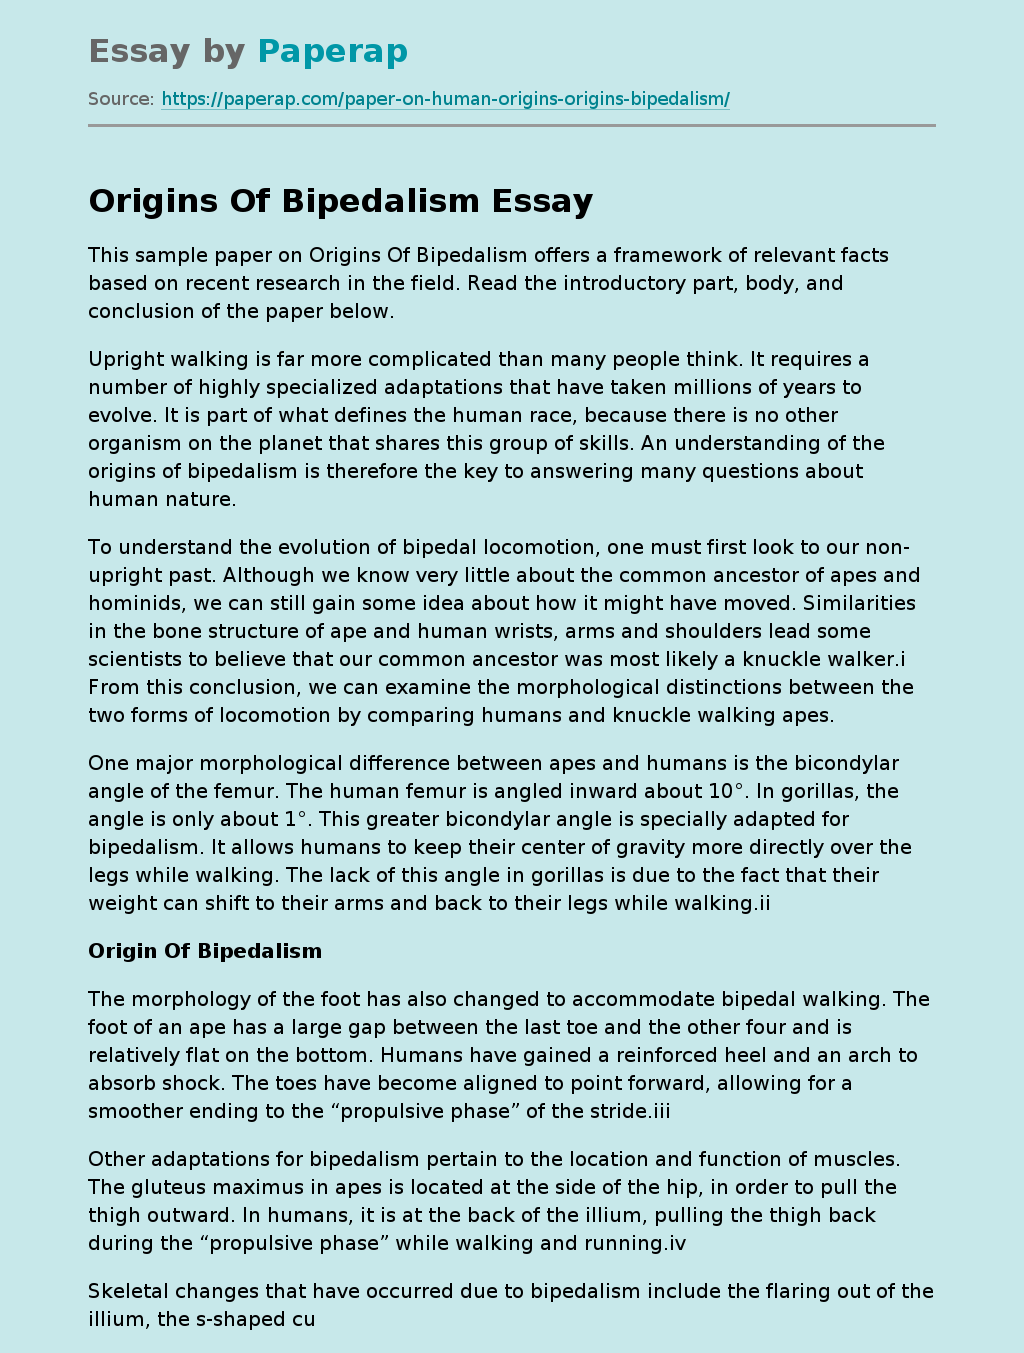 Sample Paper on Origins of Bipedalism